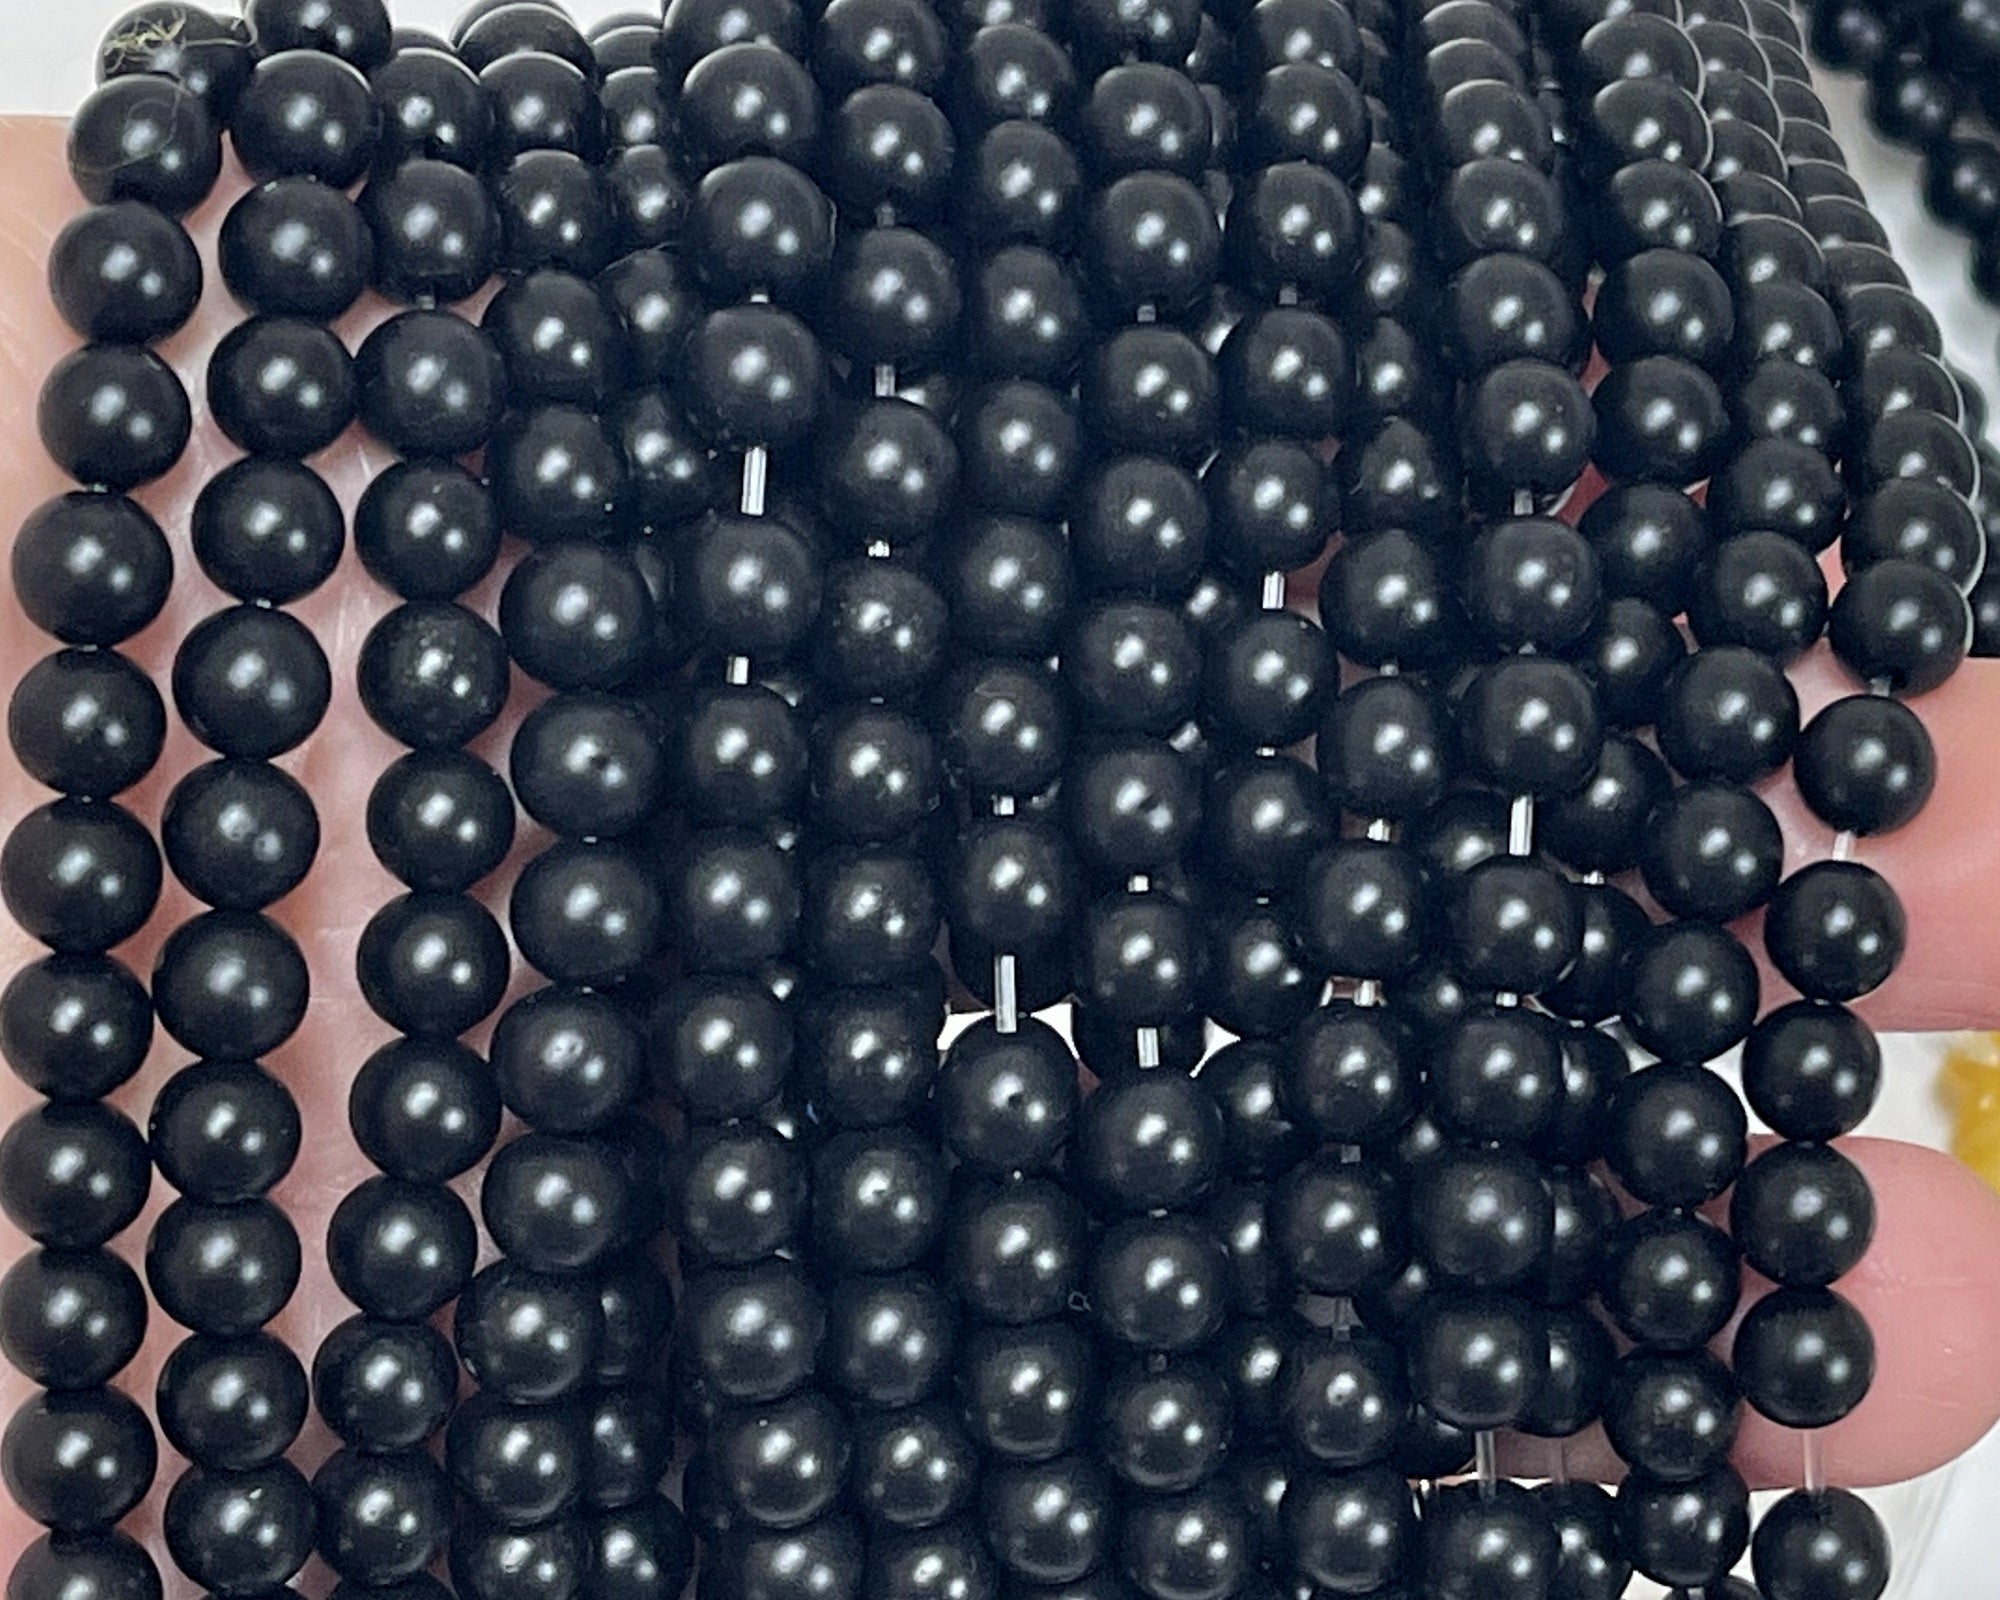 Black Onyx matte oiled 6mm round gemstone beads 16" strand